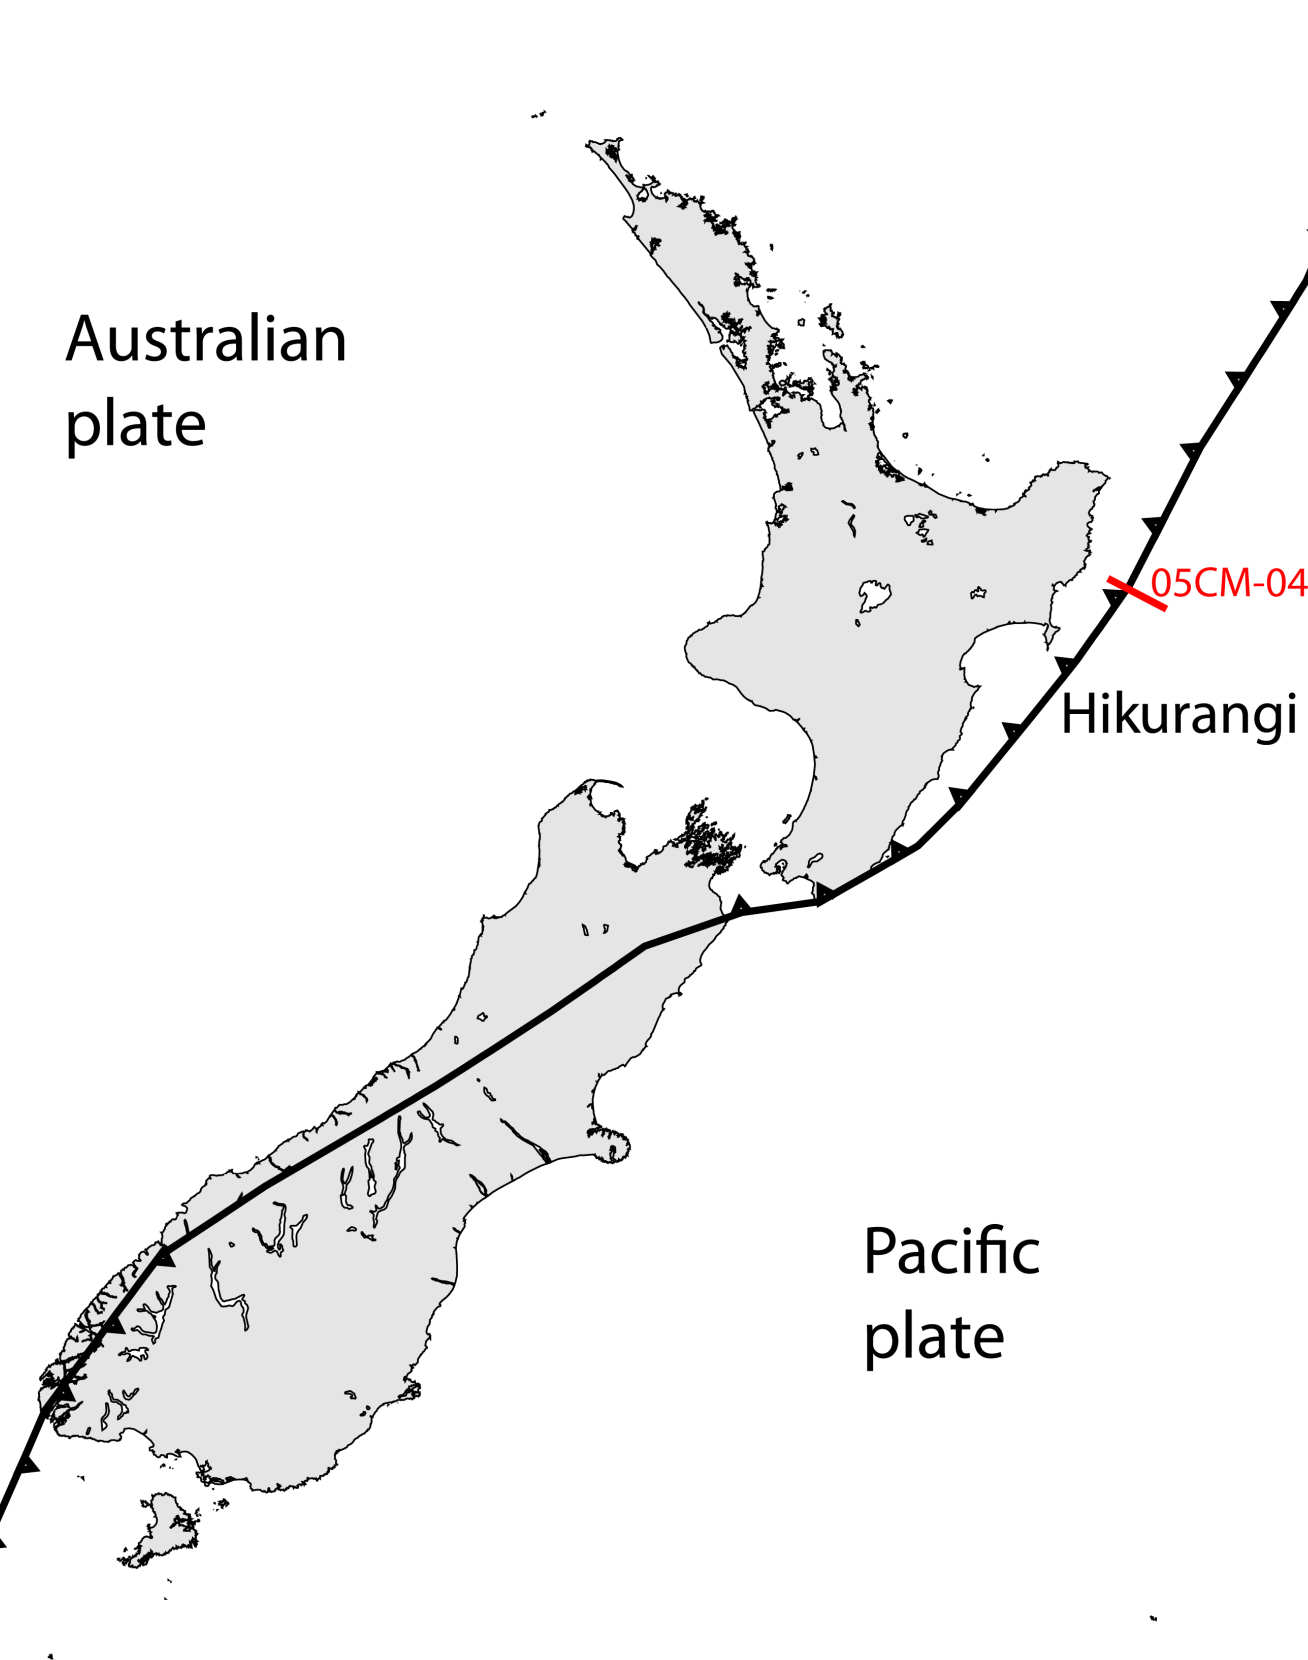 Plate boundary under New Zealand, showing the Hikurangi subduction zone near the north island.